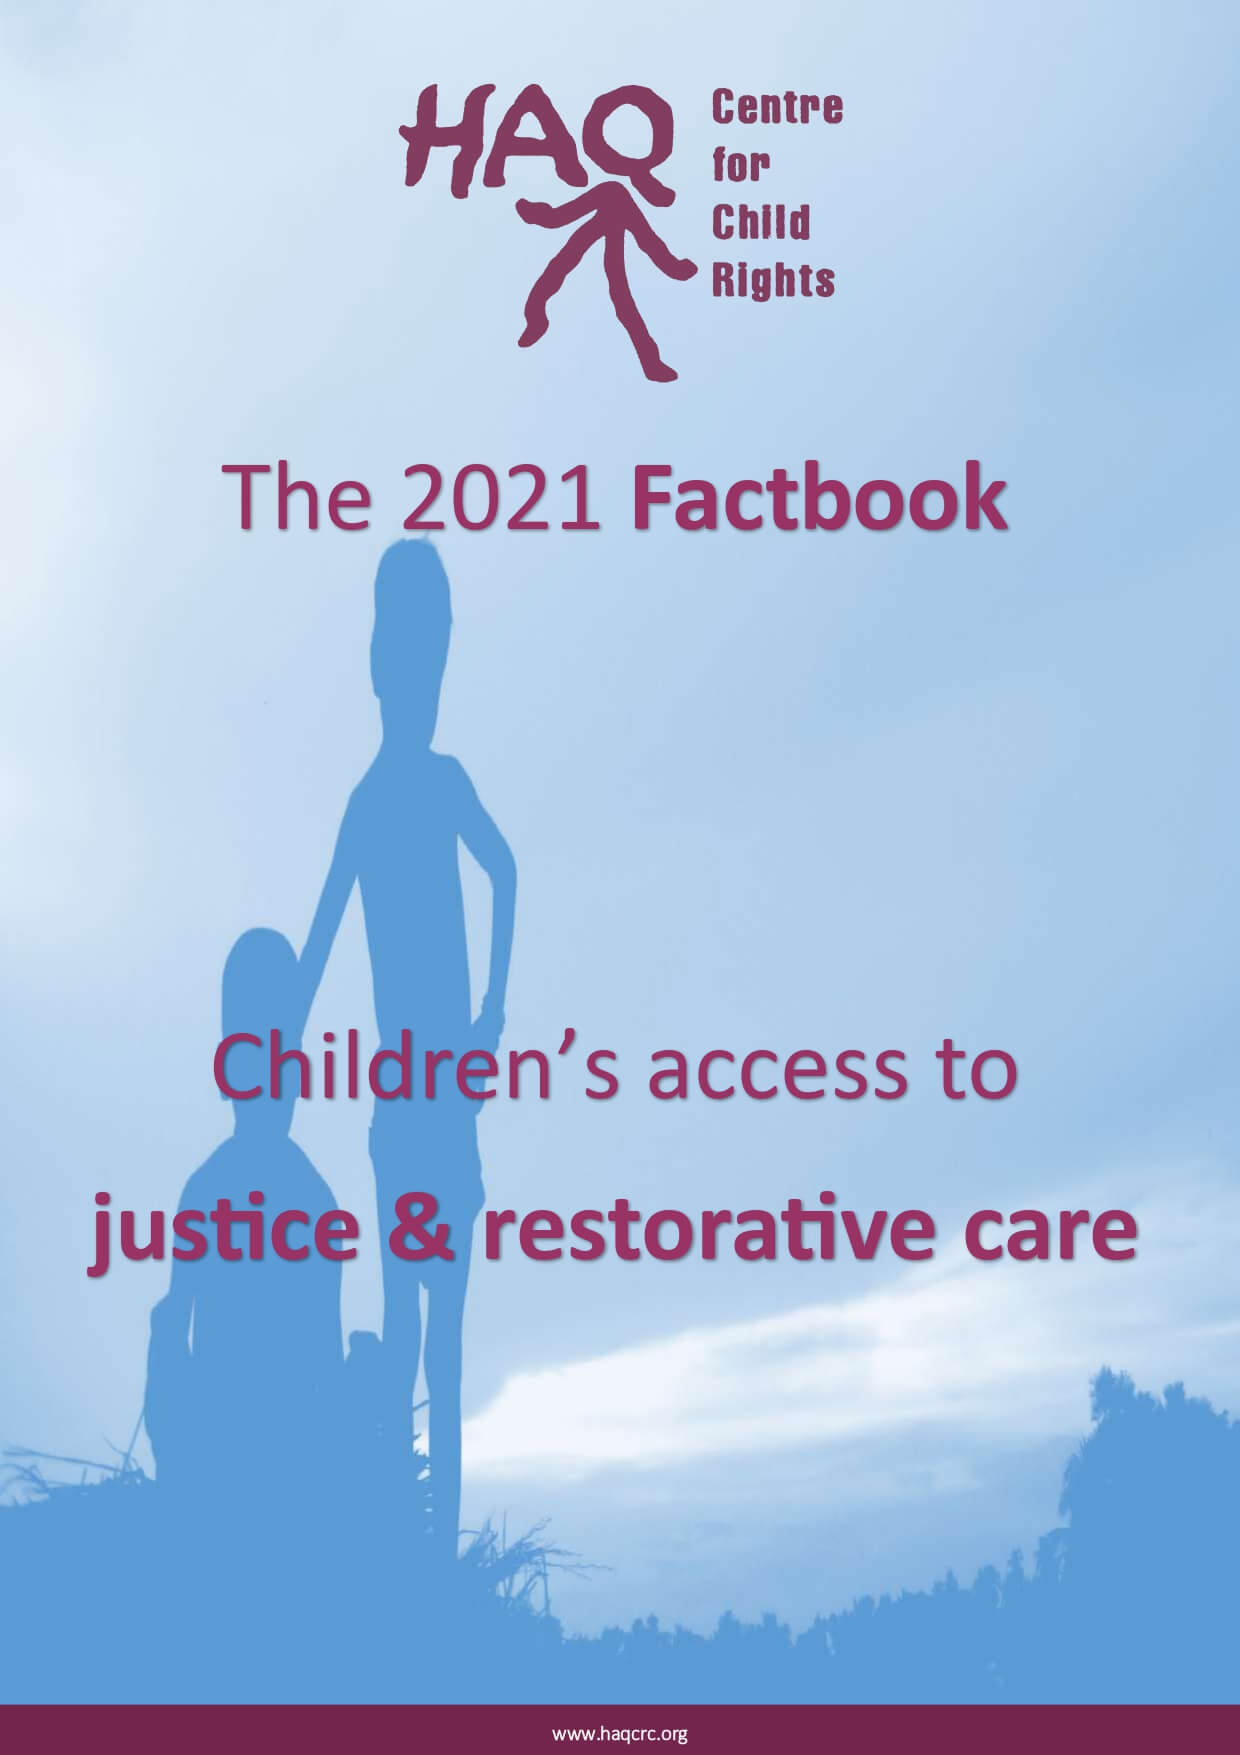 The 2021 Factbook - Access to Justice & Restorative Care